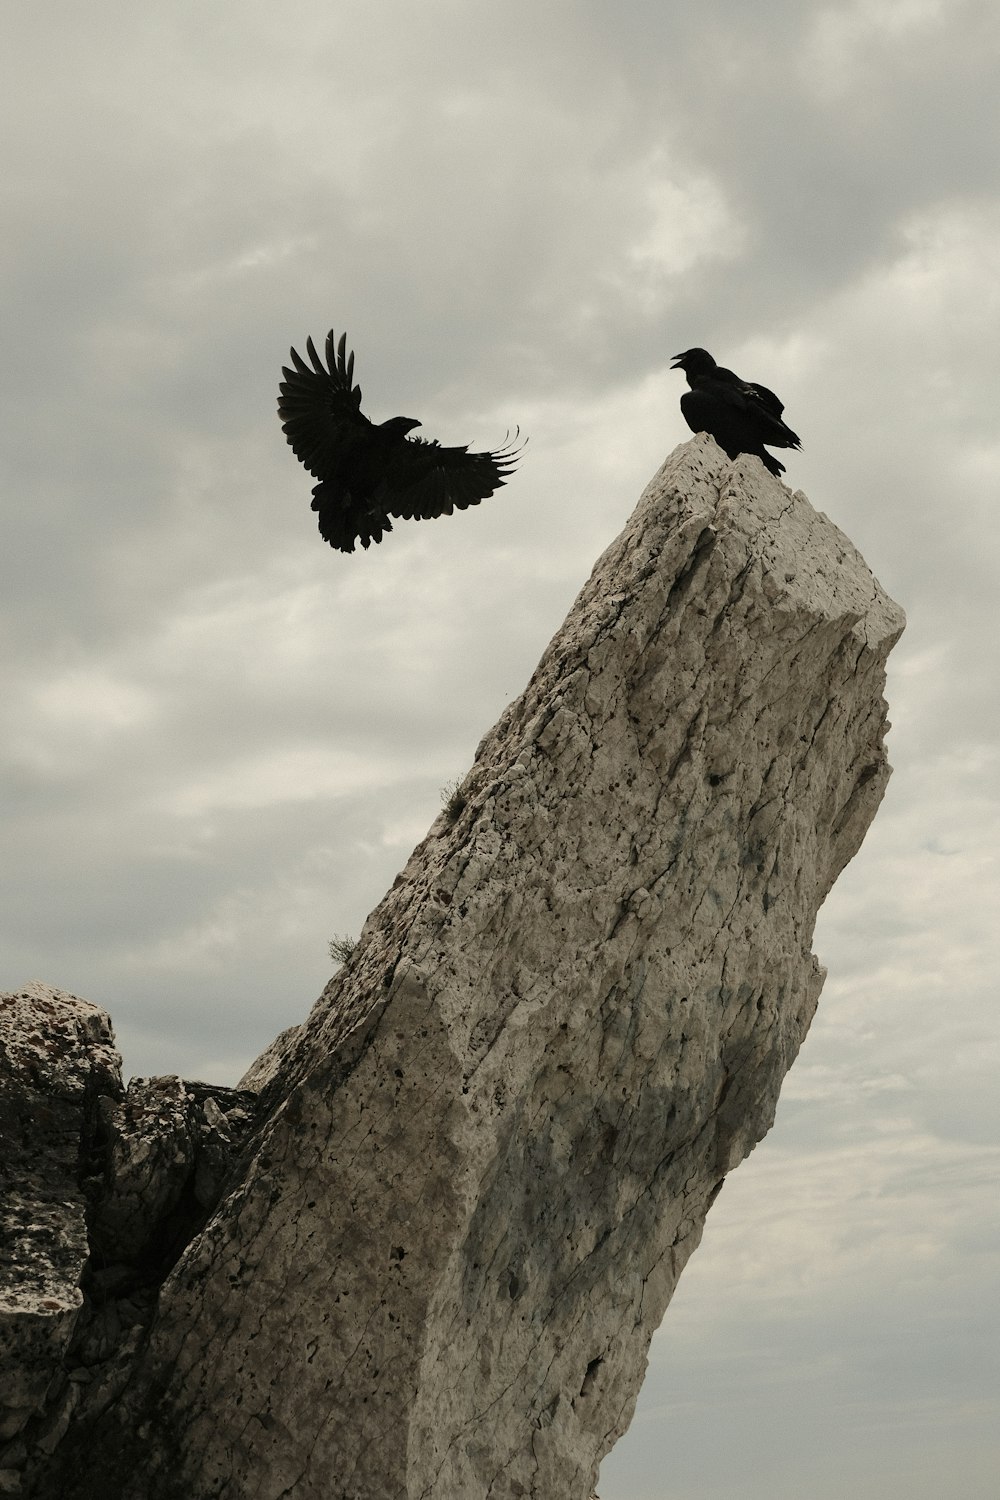 black bird flying over brown rock formation during daytime